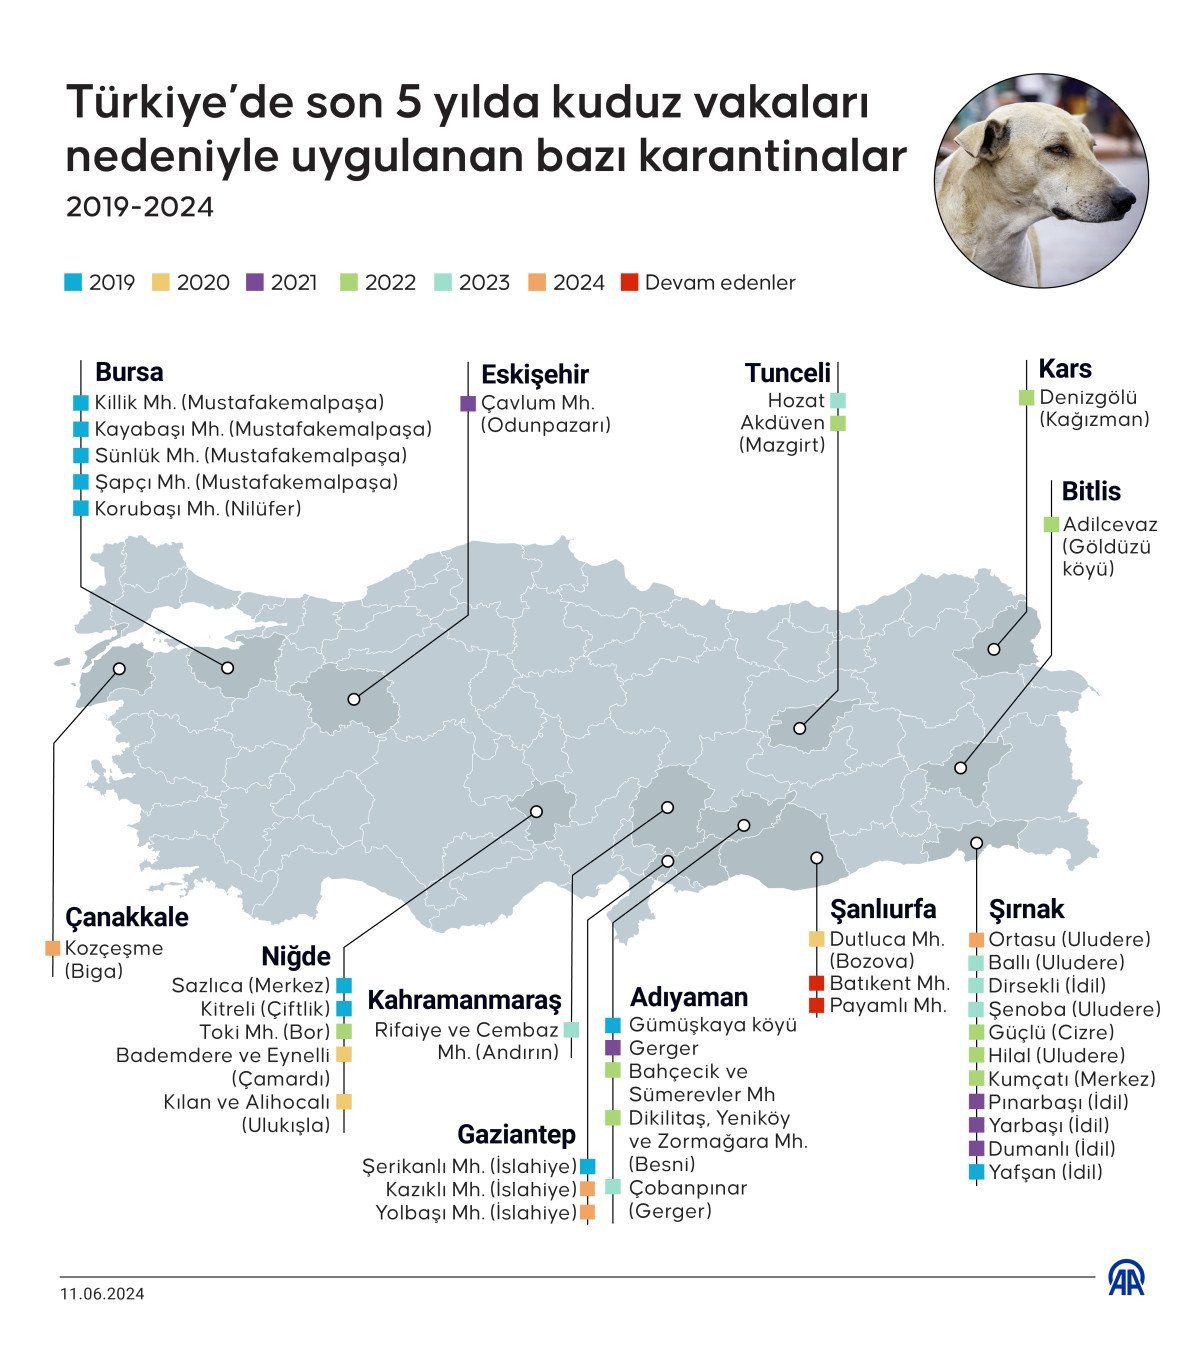 turkiyede son 5 yilda kuduz vakalari nedeniyle uygulanan karantinalar 0